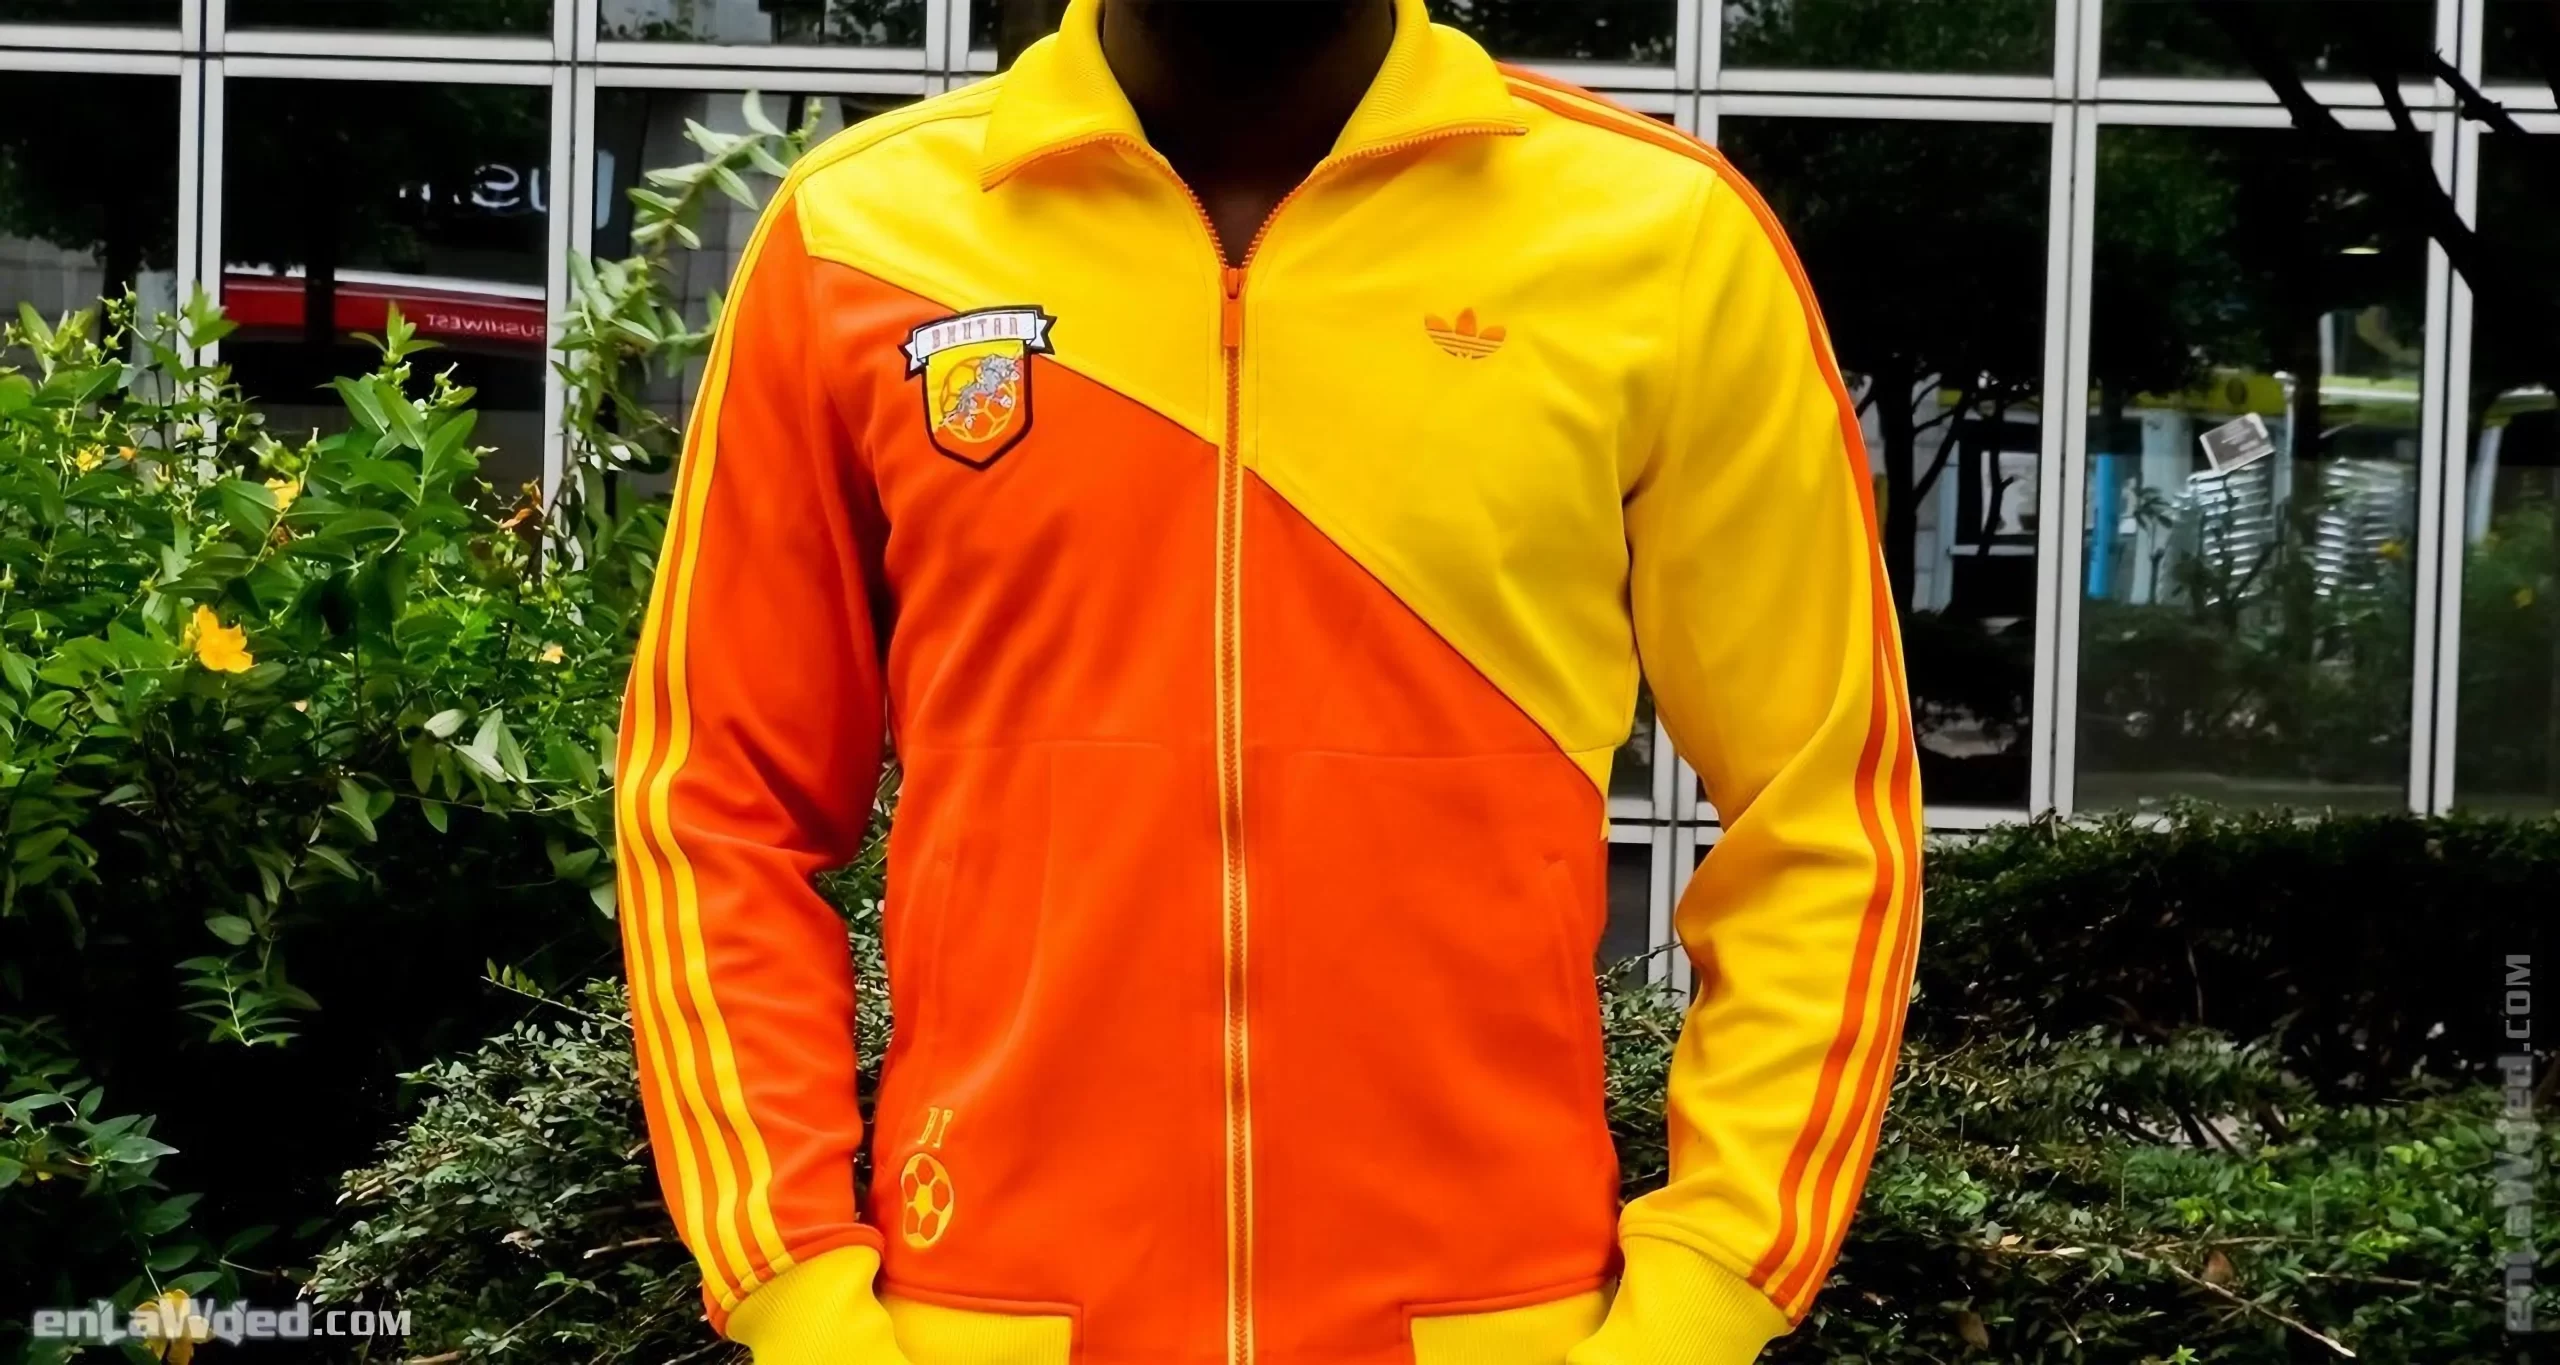 Men’s 2007 Bhutan Track Top by Adidas Originals: Arrogant (EnLawded.com file #lmchk90652ip2y123227kg9st)